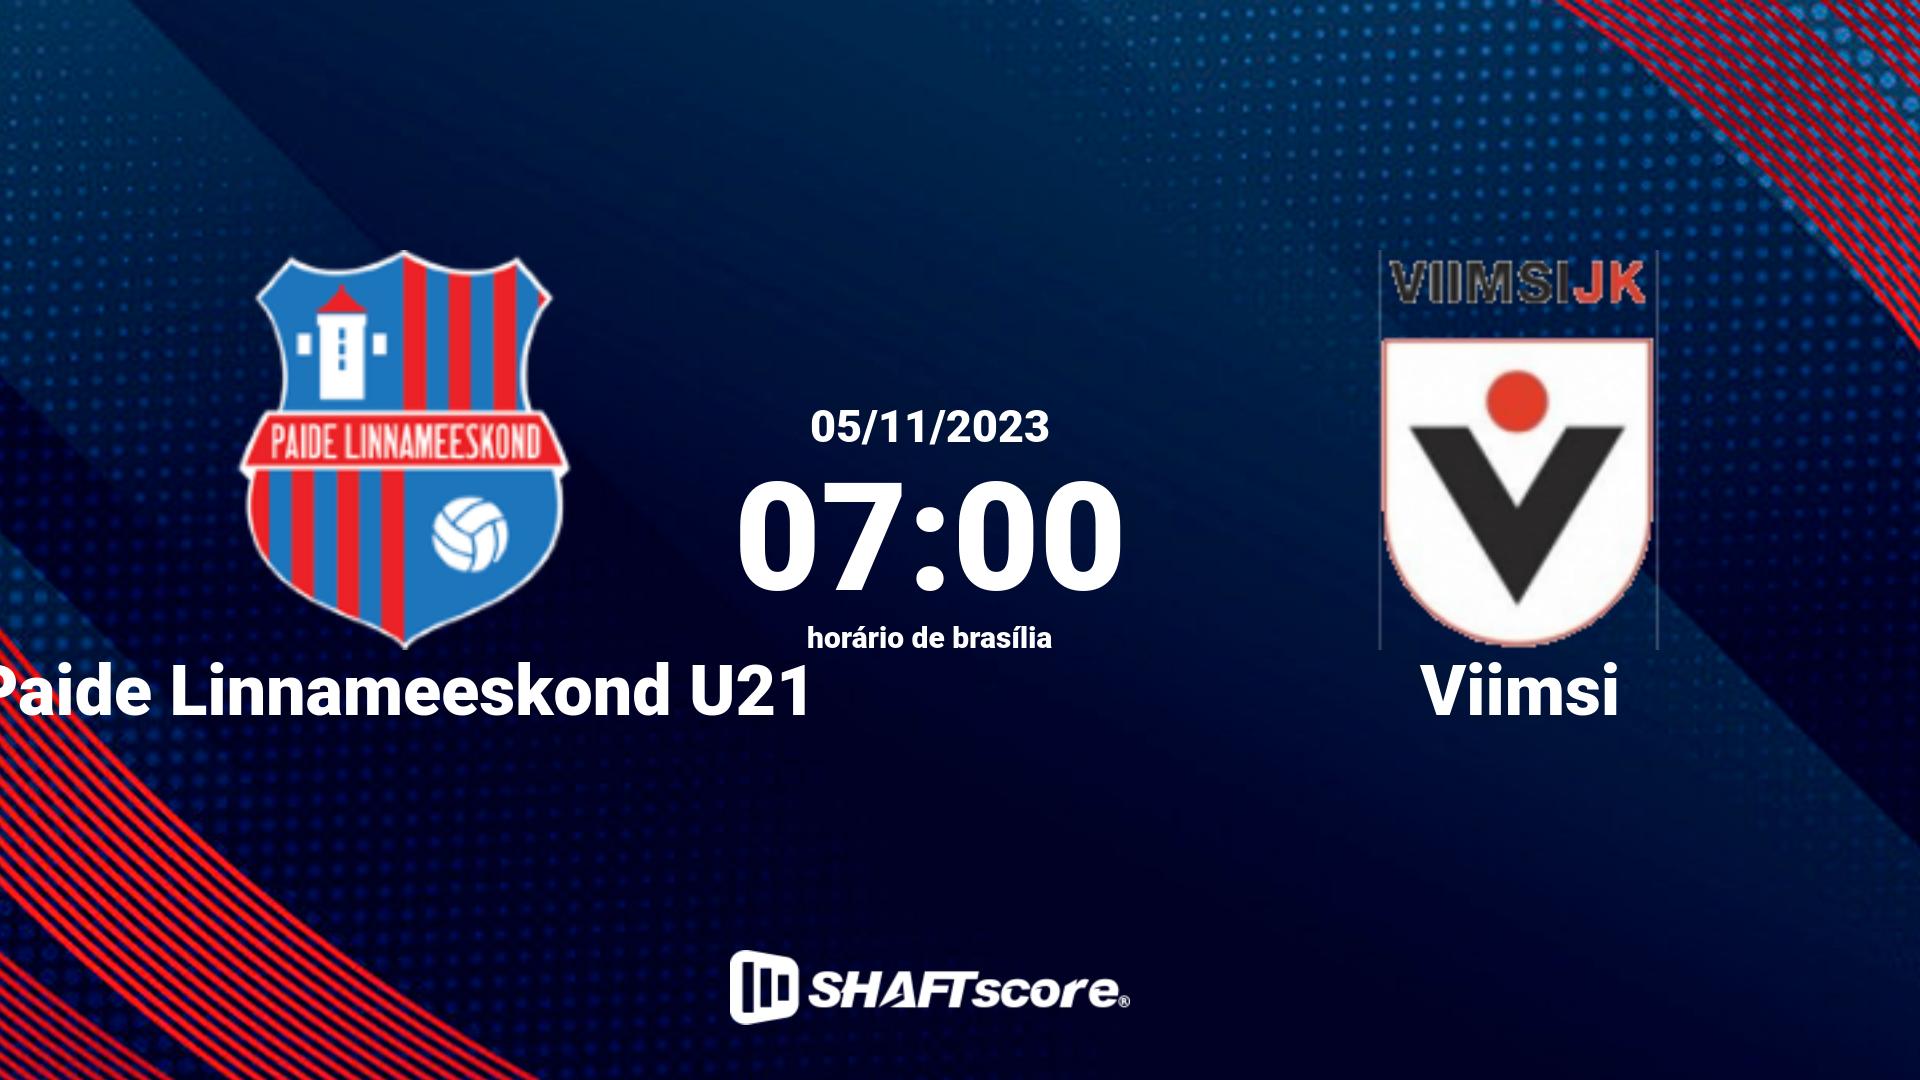 Estatísticas do jogo Paide Linnameeskond U21 vs Viimsi 05.11 07:00